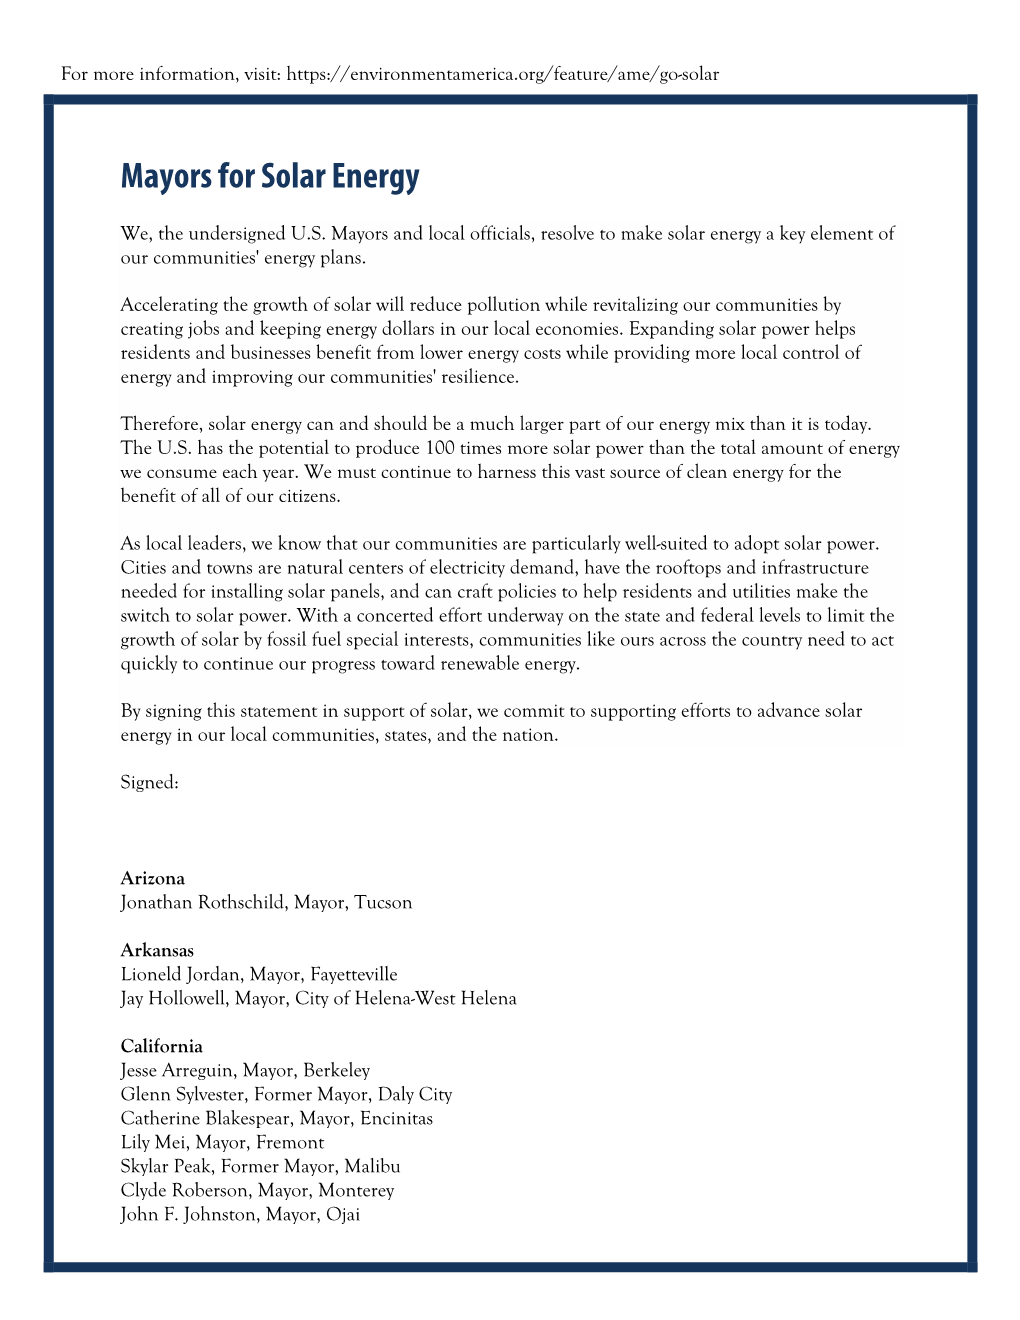 Mayors for Solar Energy